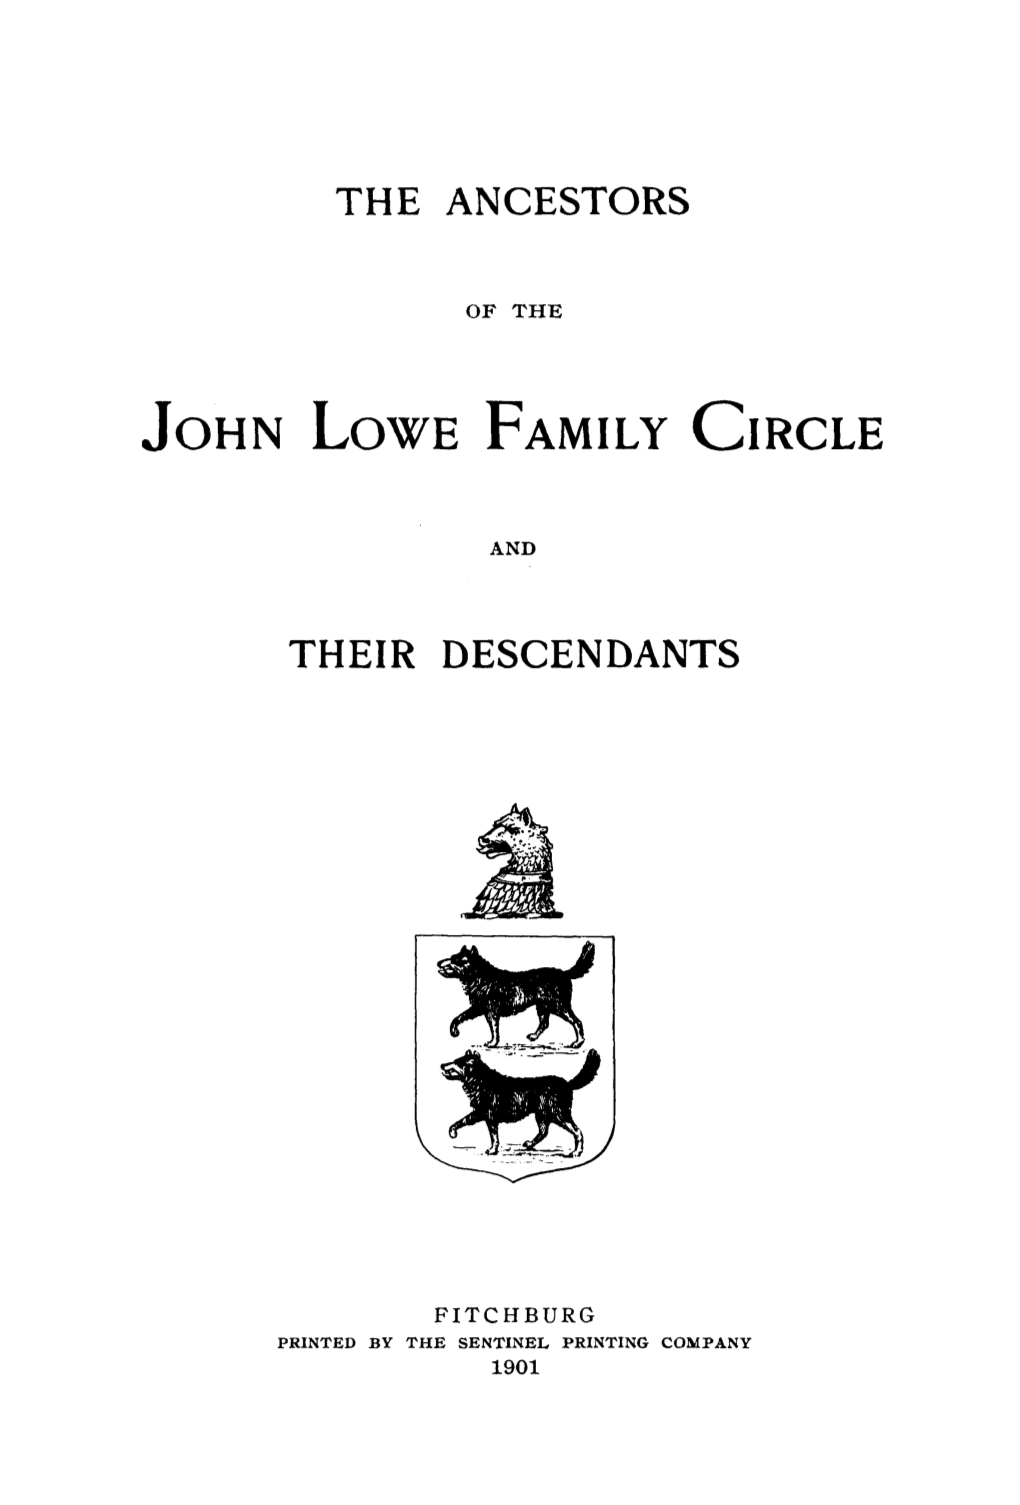 John Lowe Family Circle